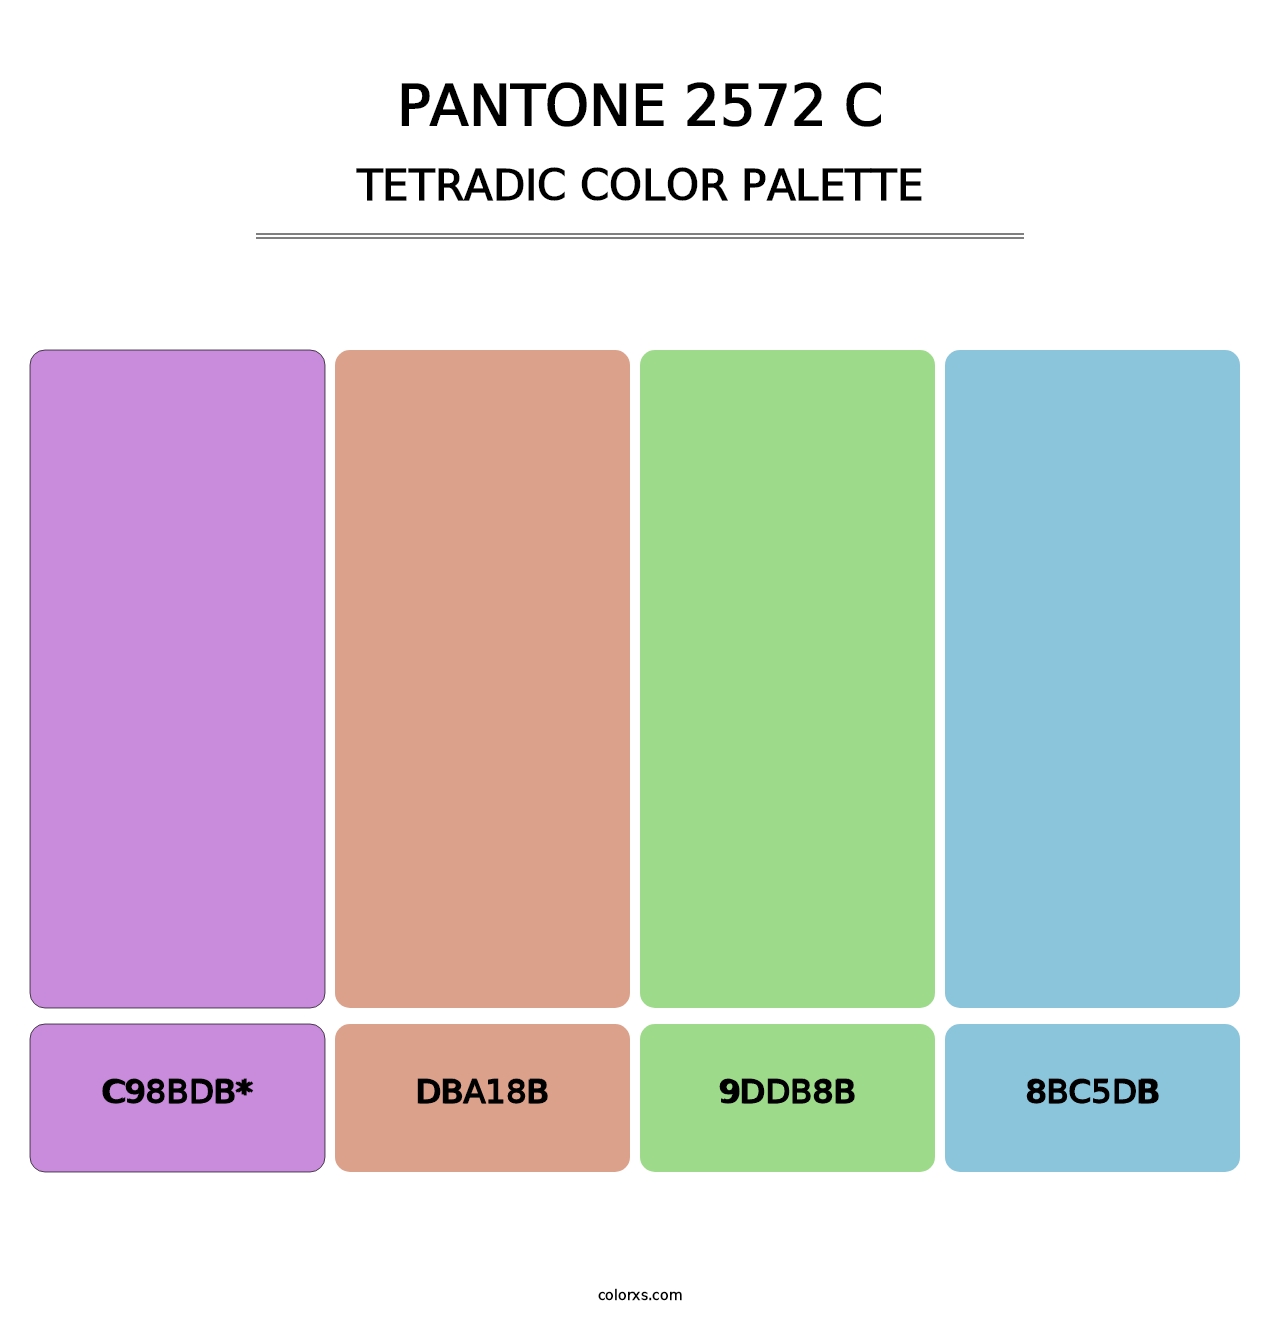 PANTONE 2572 C - Tetradic Color Palette